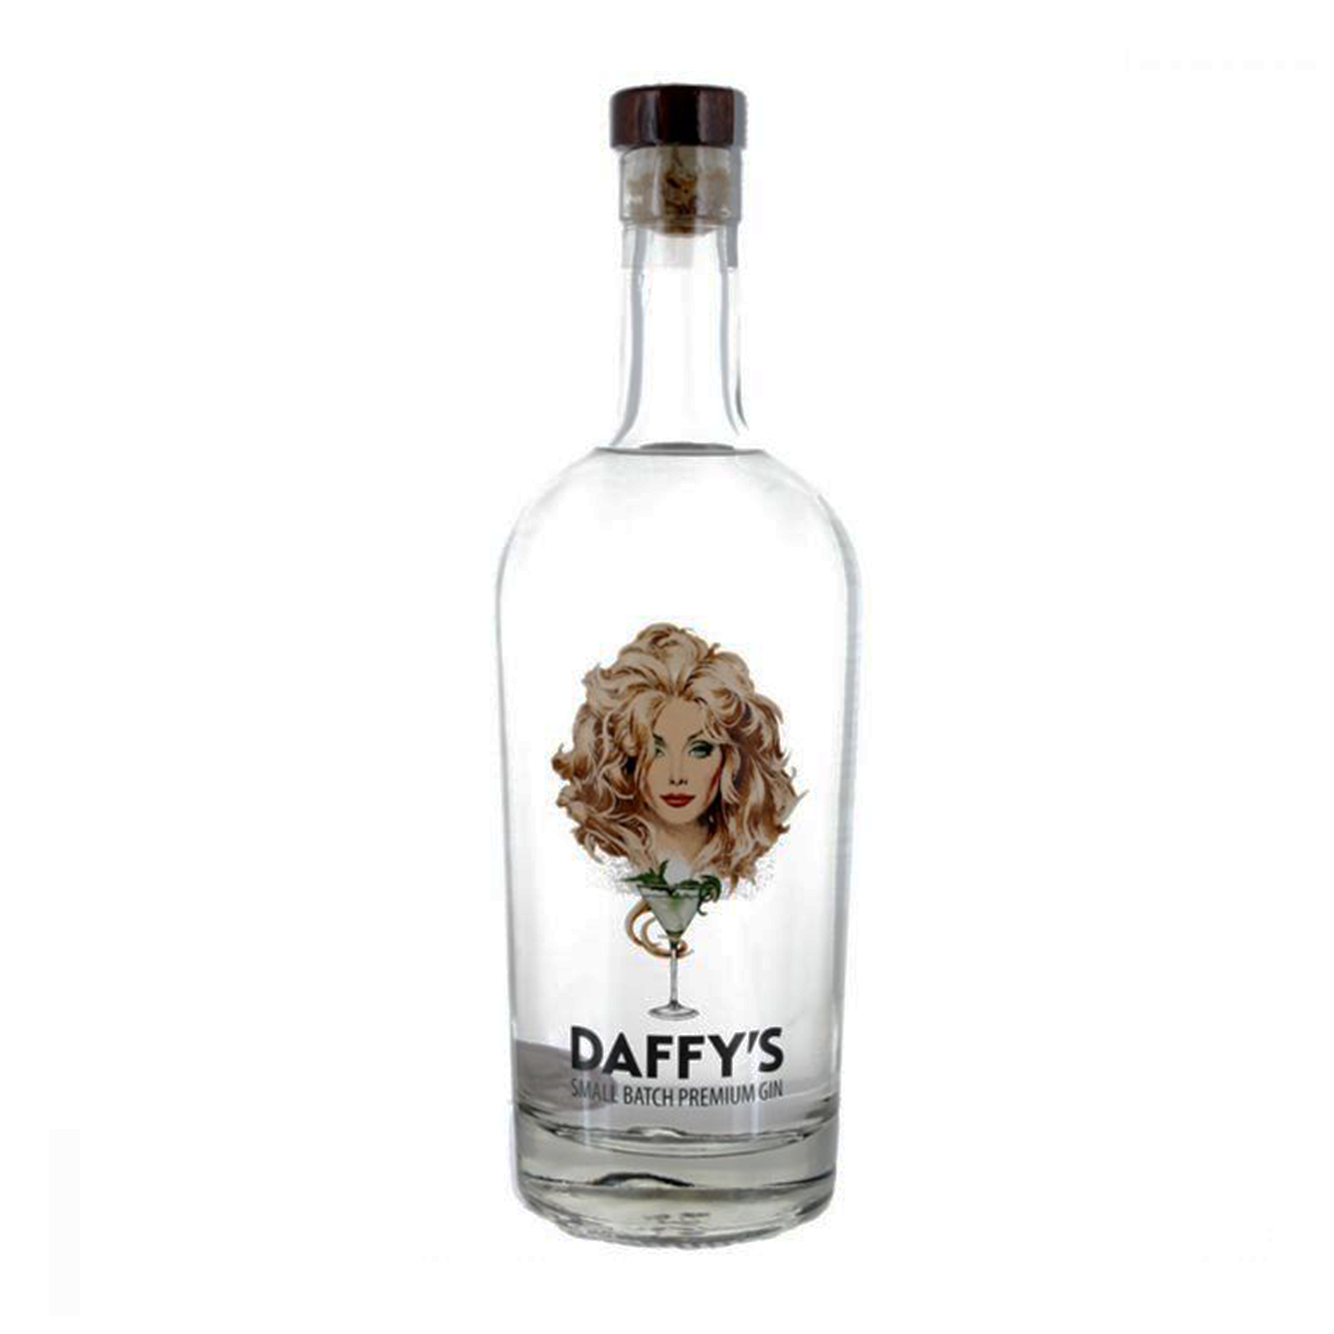 Daffy's Gin Small Batch Premium Gin